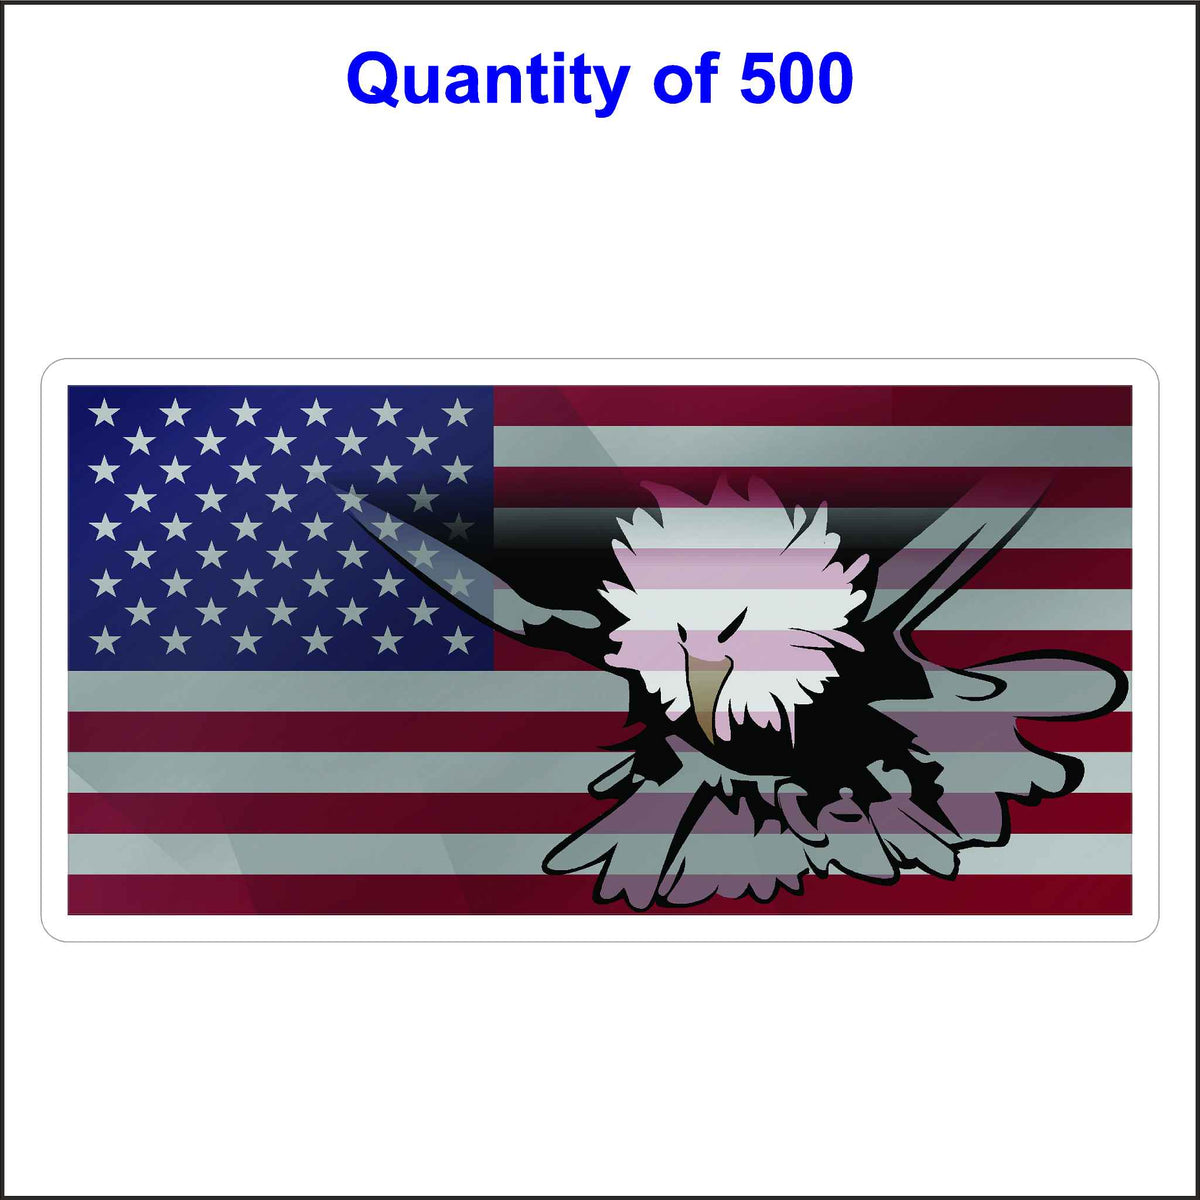 Full Color Reflective American Flag Sticker. 500 Quantity.